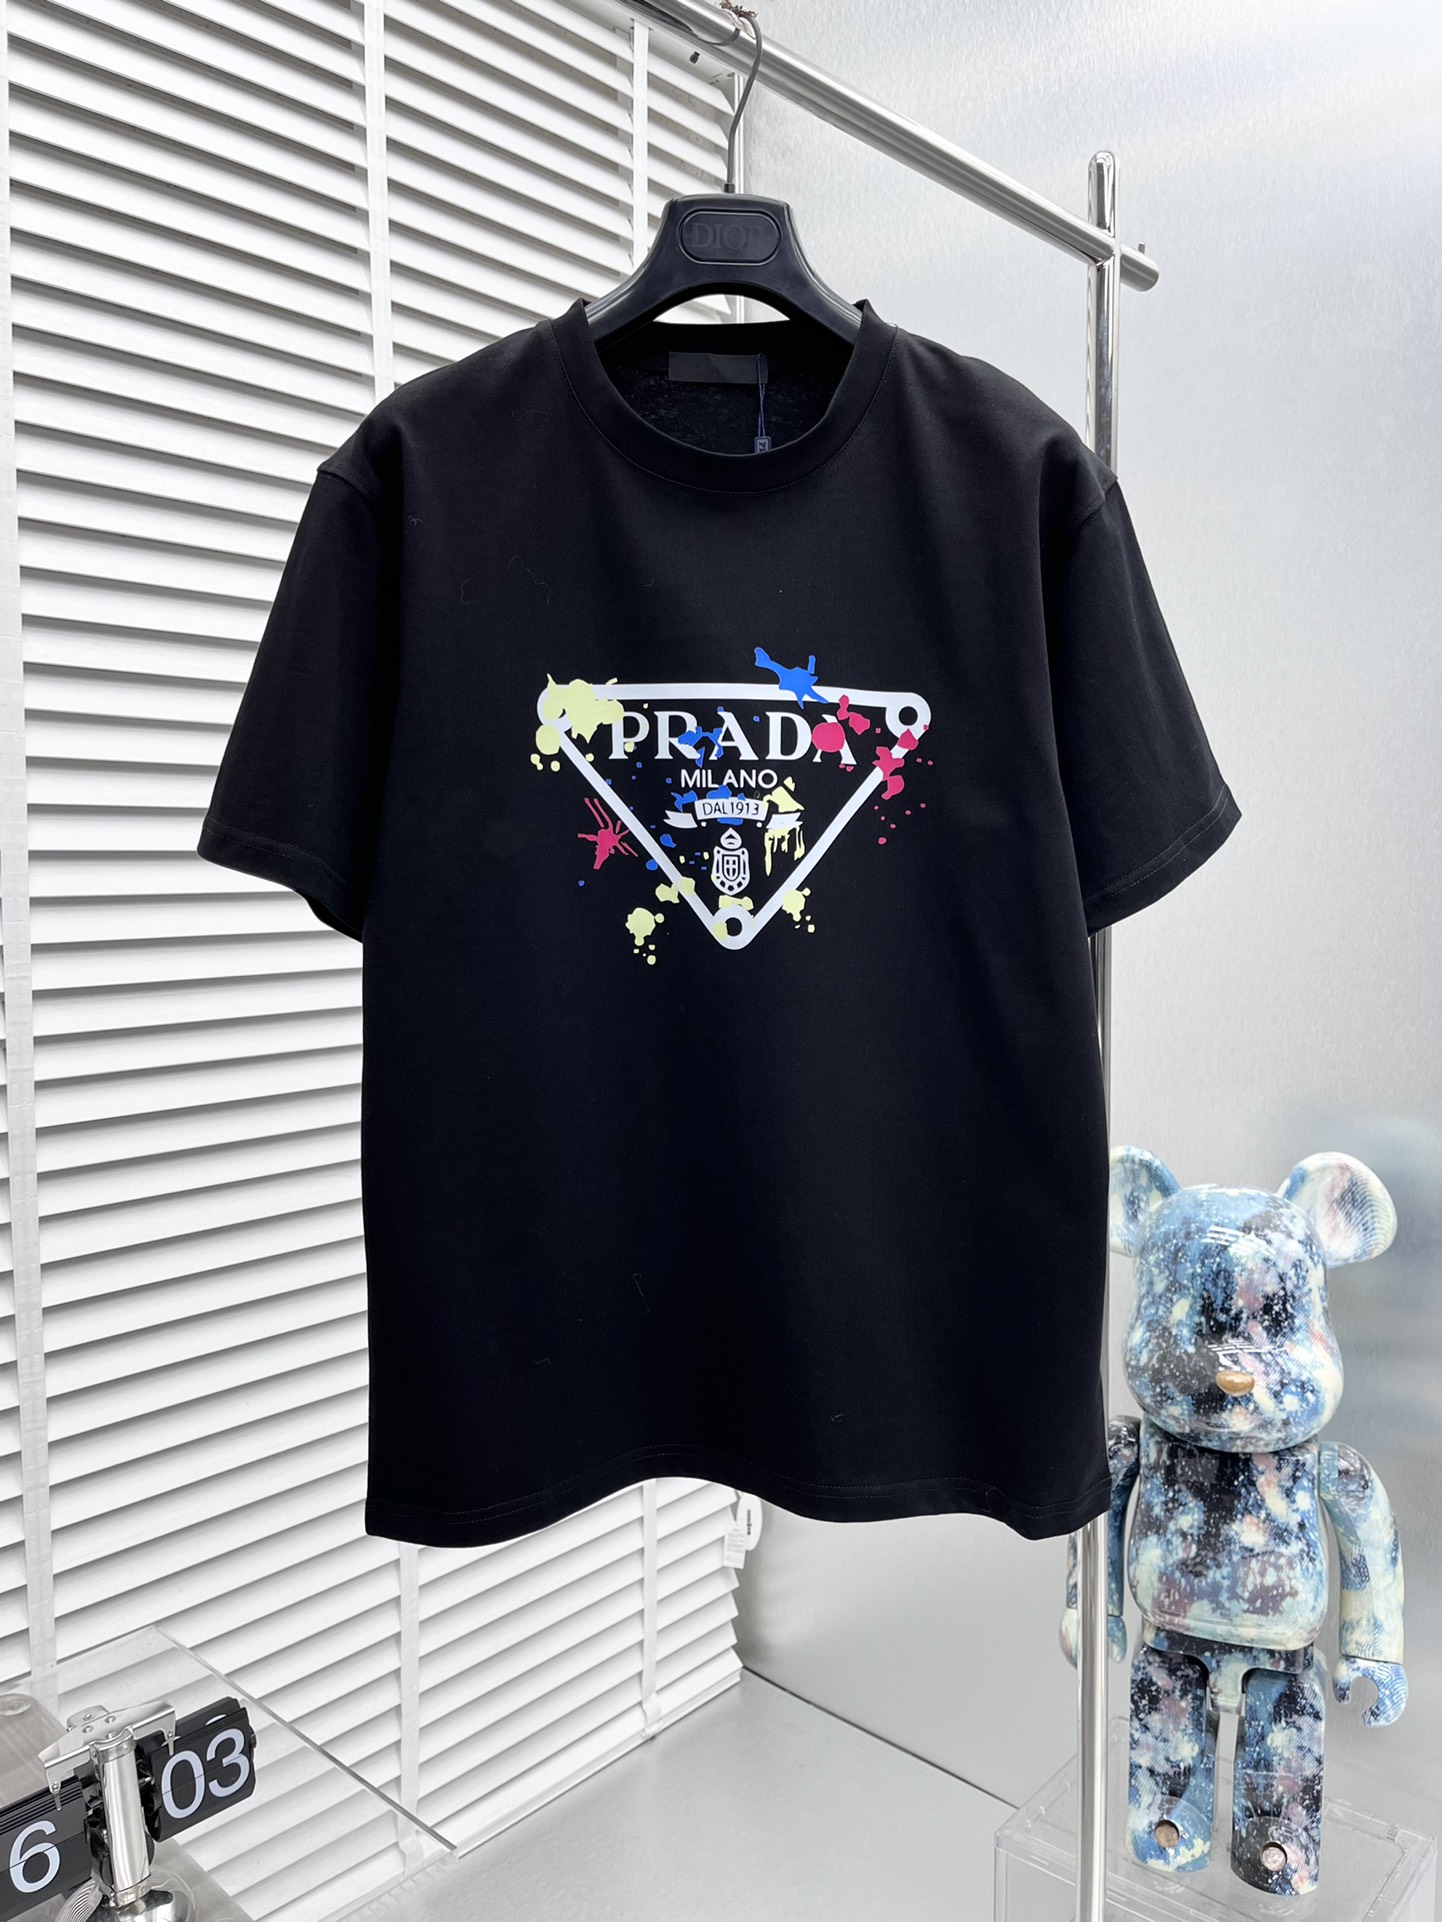 Prada Clothing T-Shirt Black White Printing Unisex Spring/Summer Collection Short Sleeve